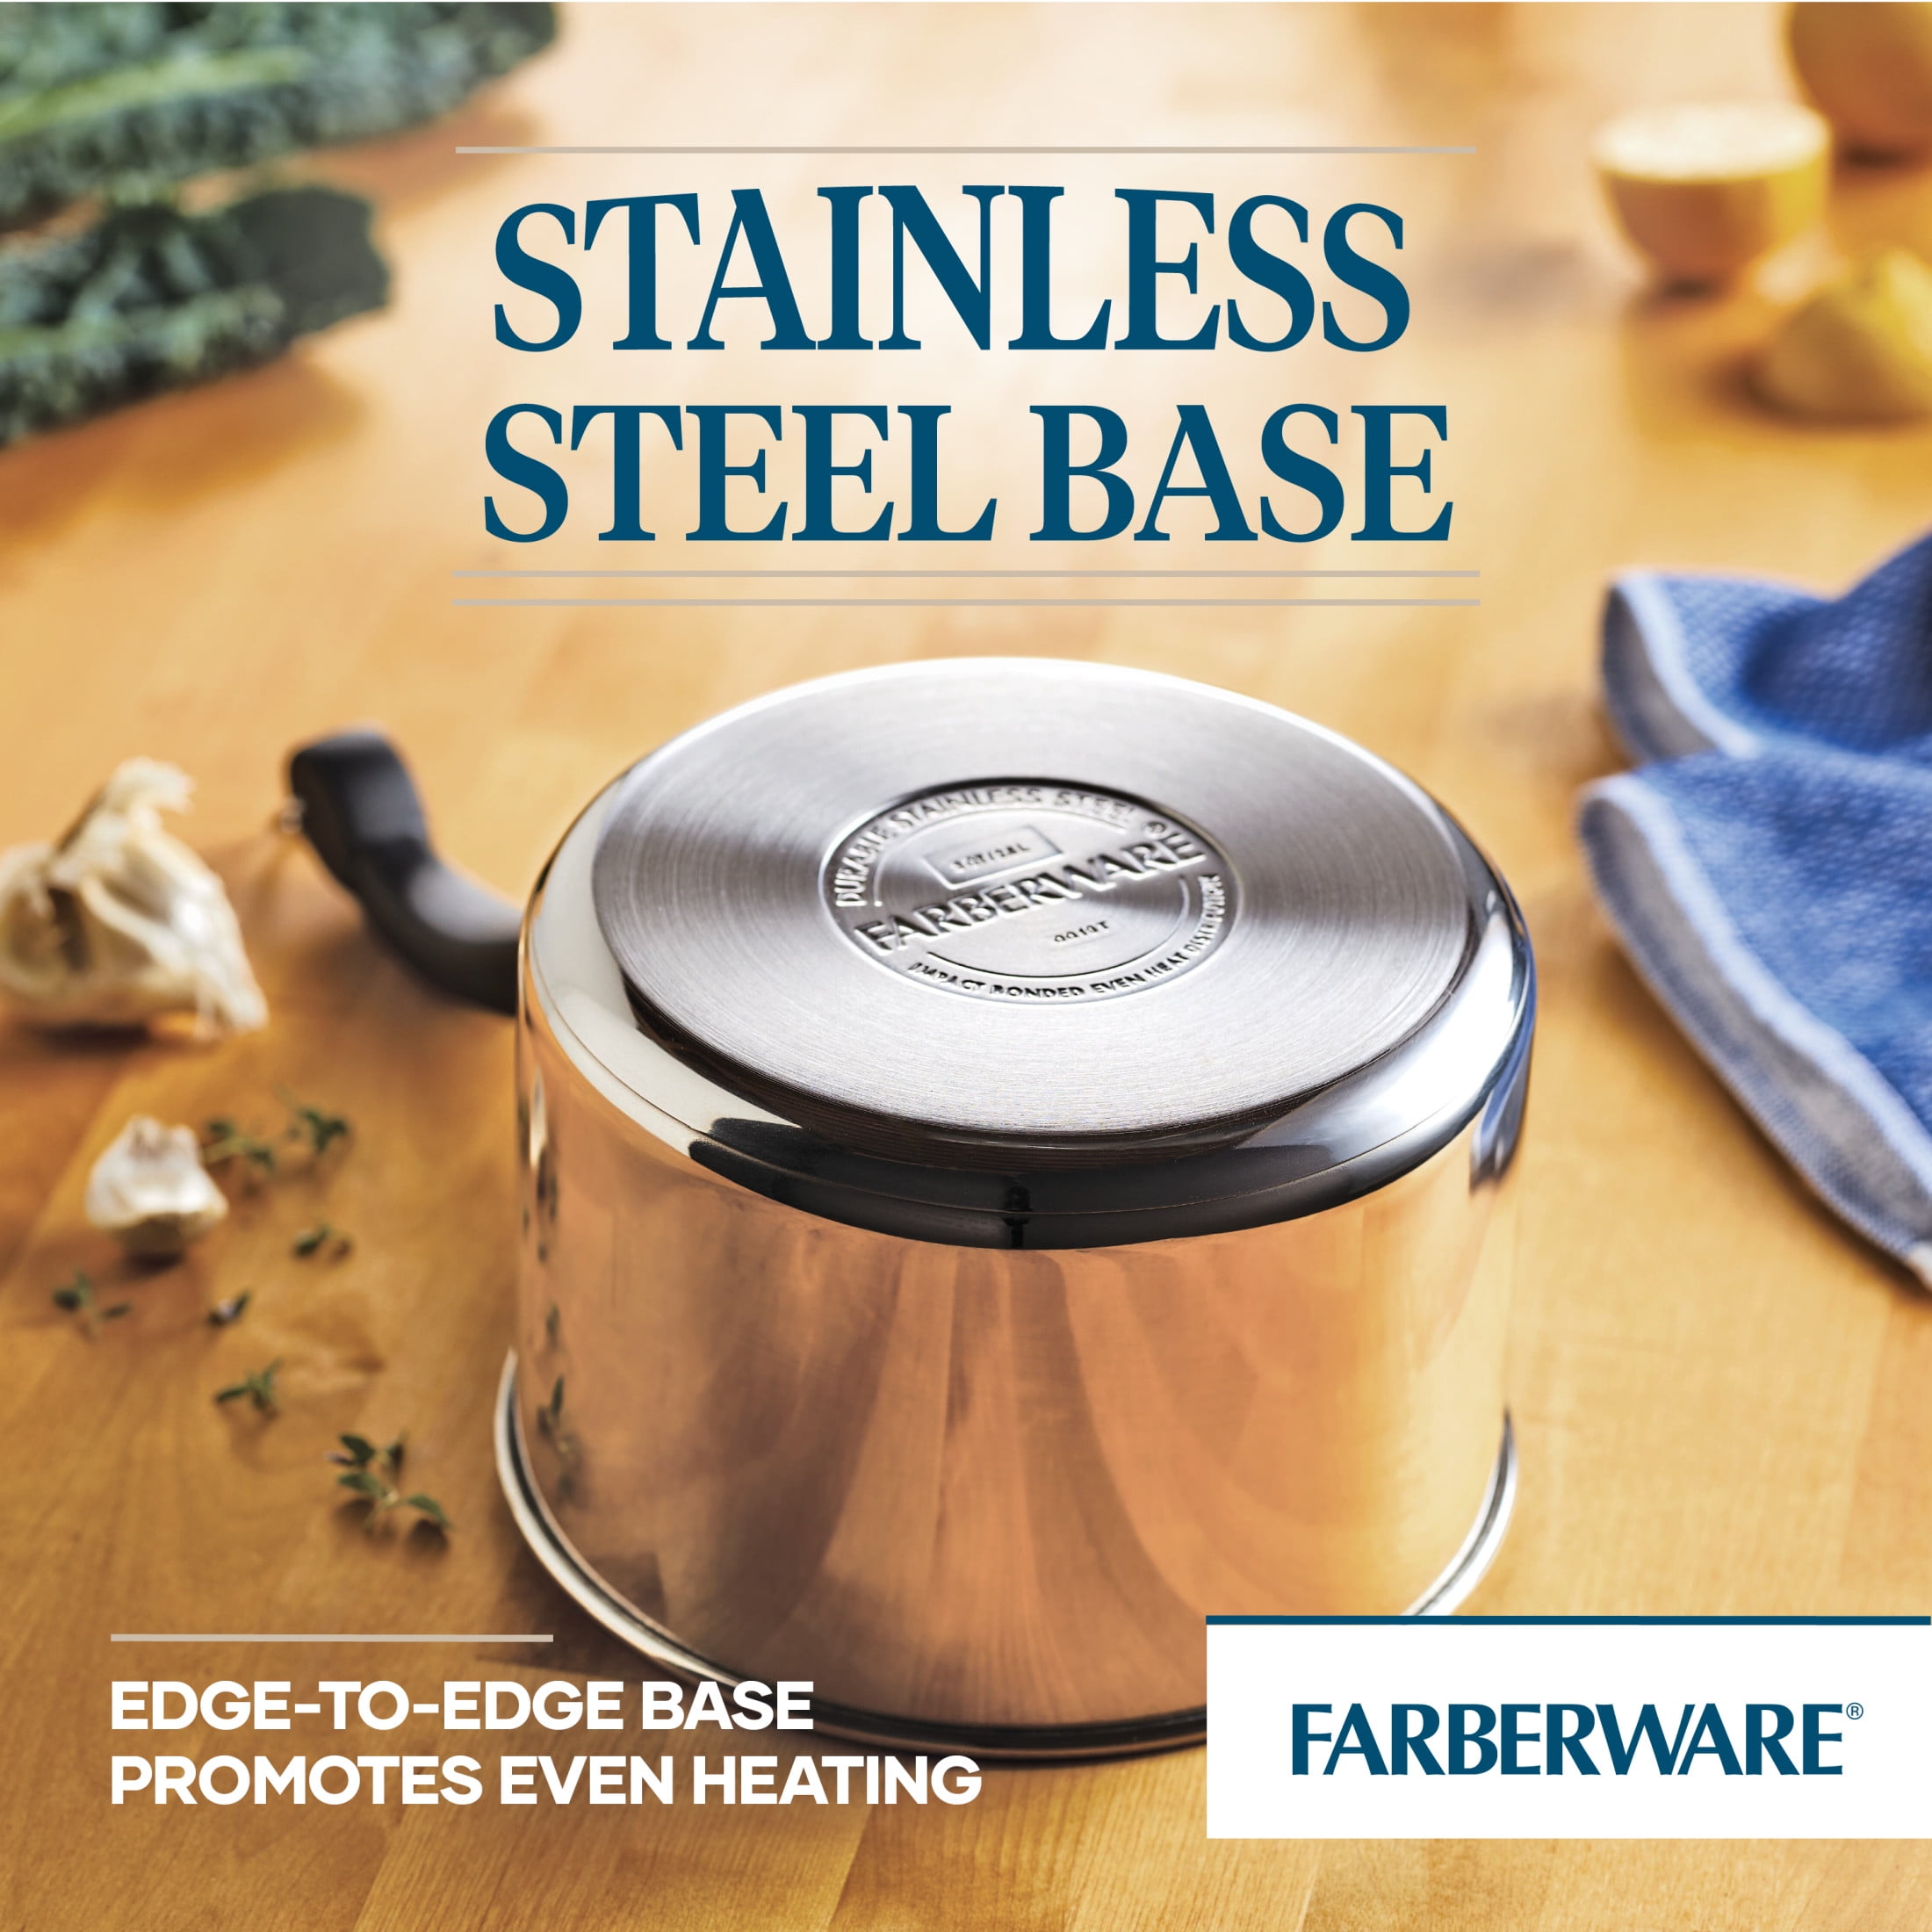 Farberware® Classic Series 3-qt. Covered Straining Saucepan